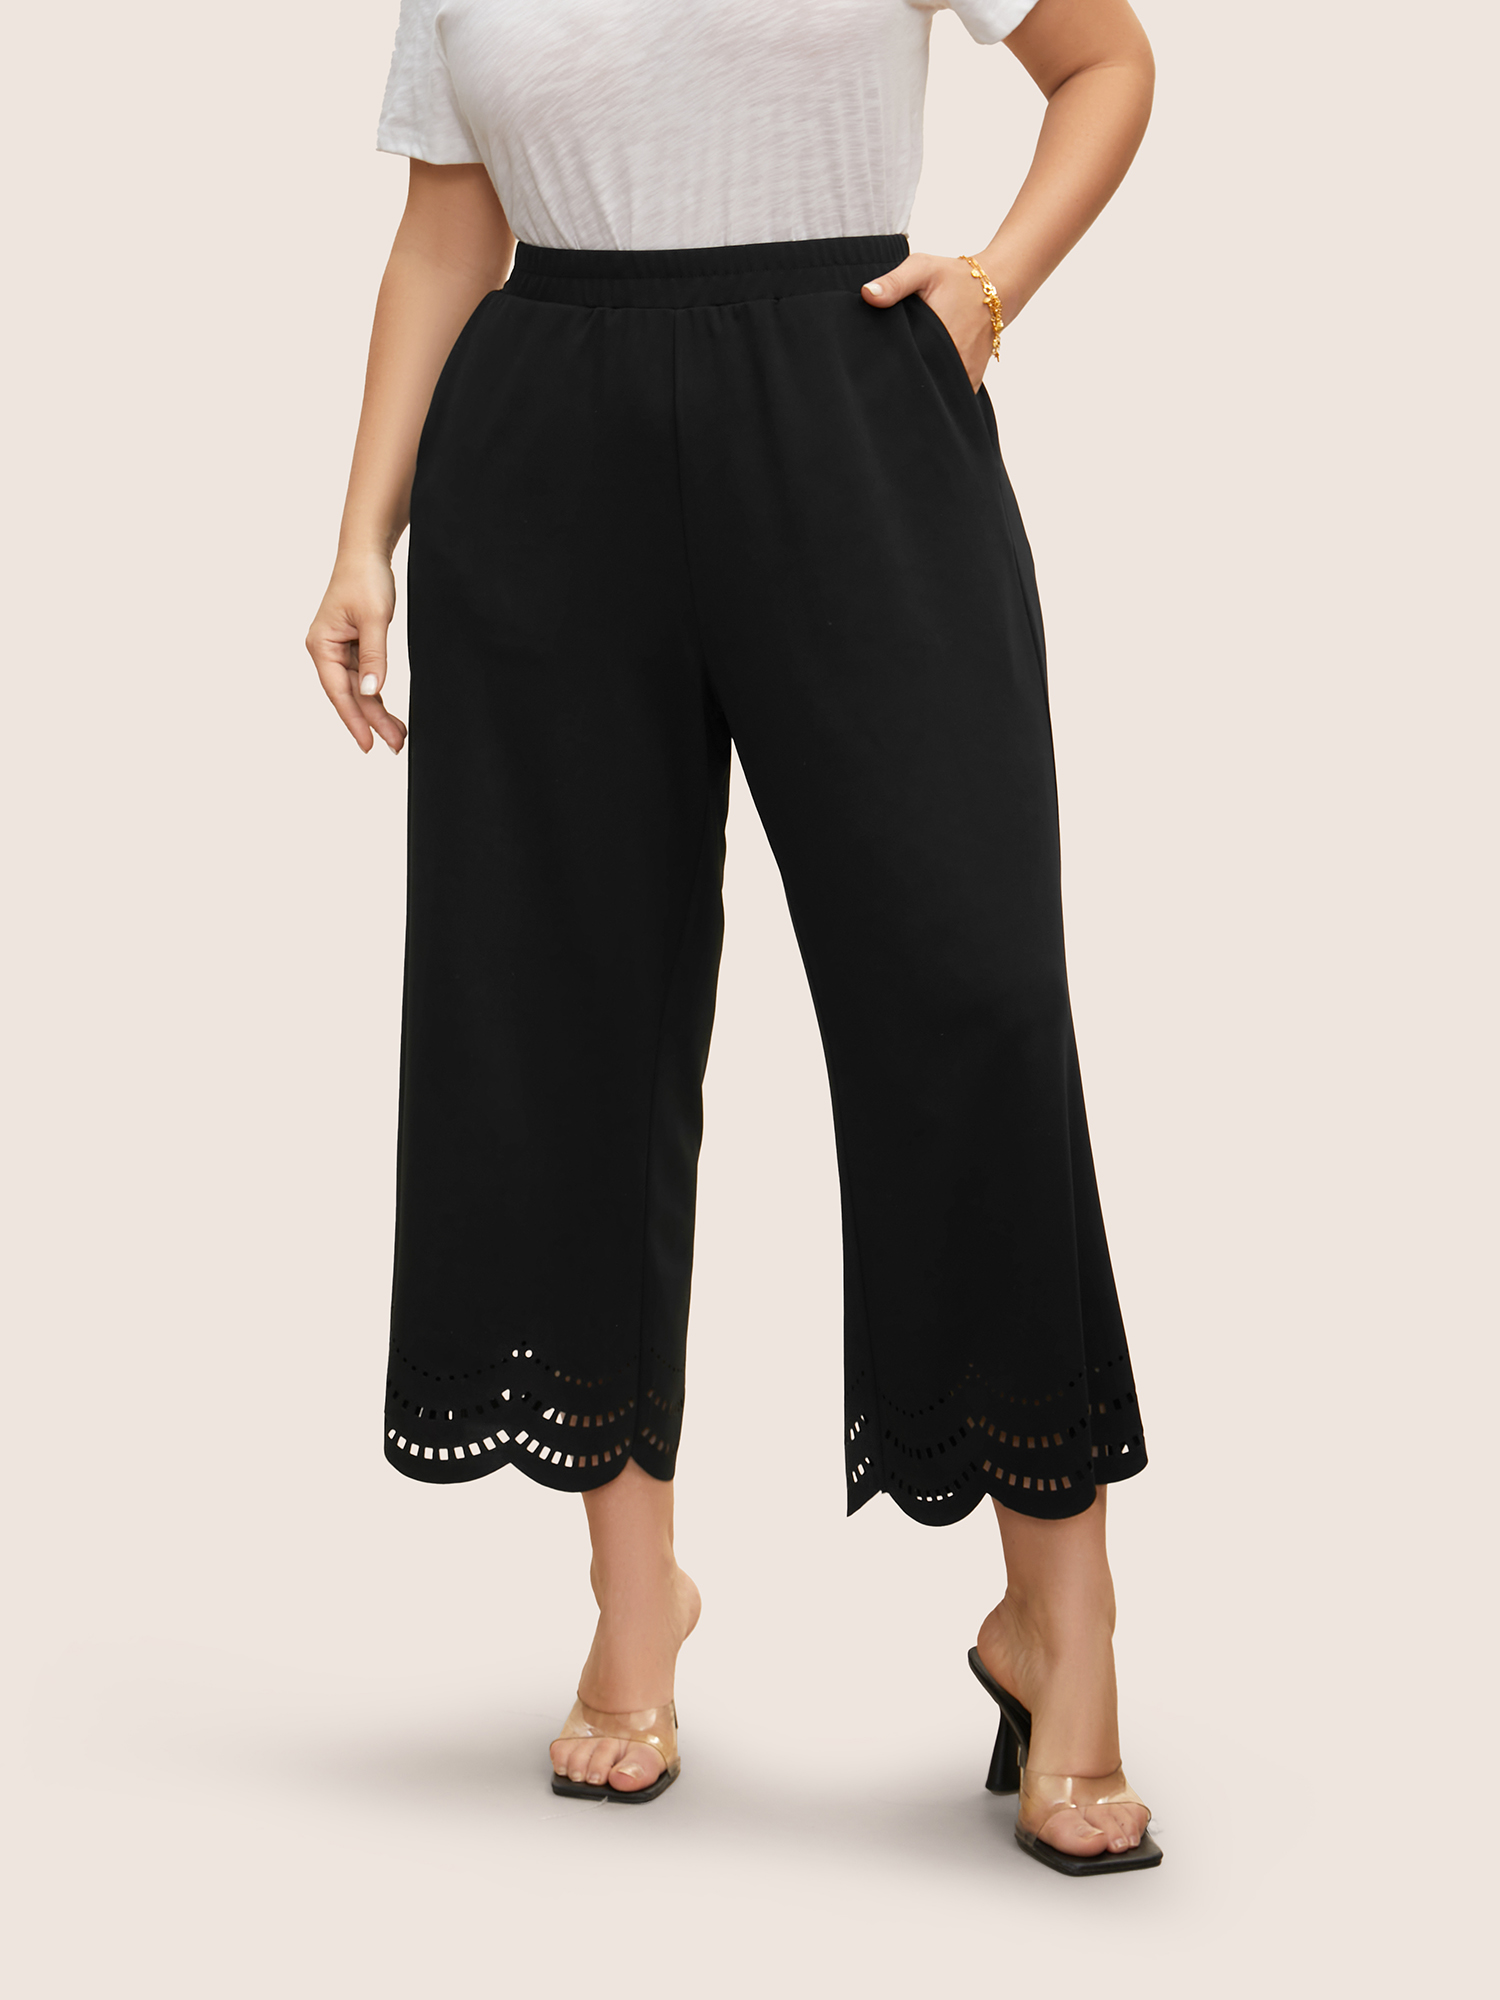 

Plus Size Medium stretch Laser Cut Elastic Waist Pants Women Black Elegant Wide Leg Mid Rise Everyday Pants BloomChic